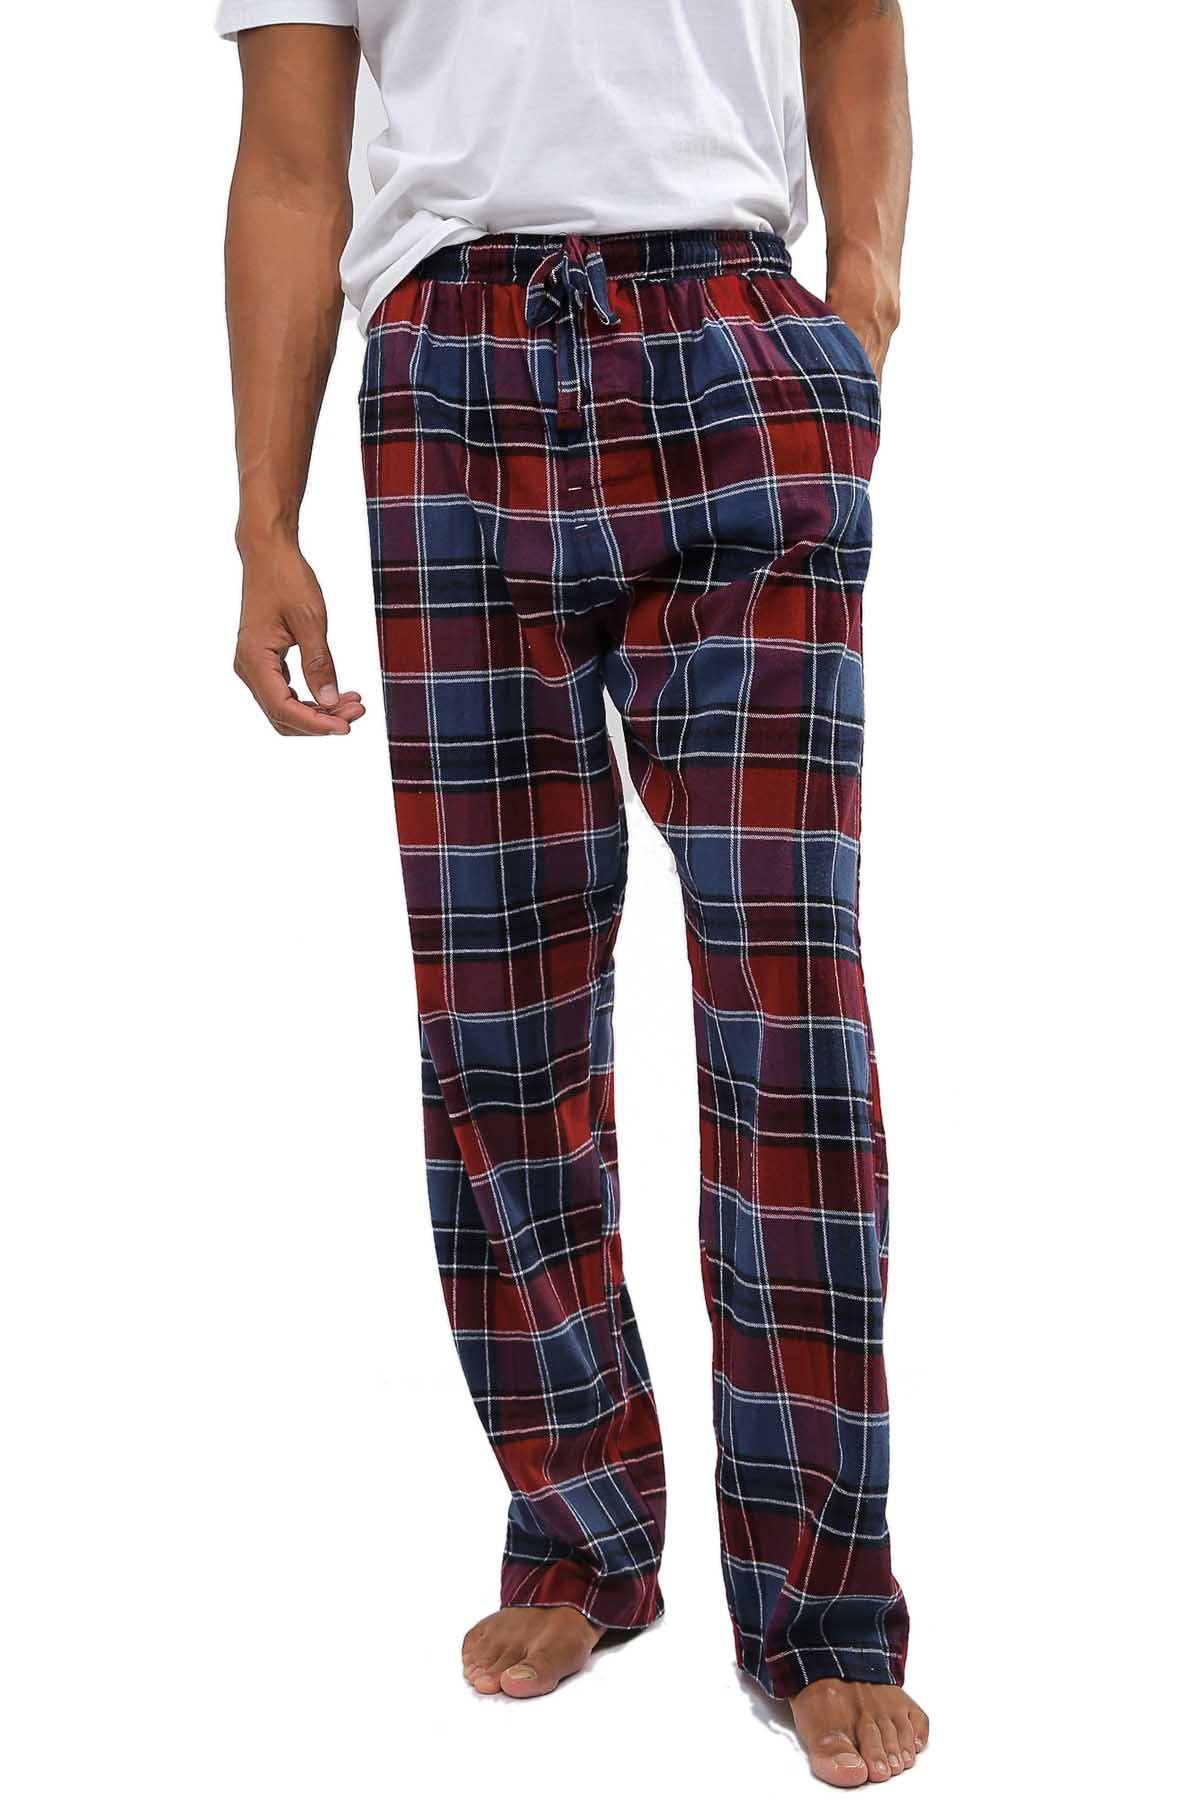 Memphis Blues Red/Blue Flannel Pajama Pant | CheapUndies